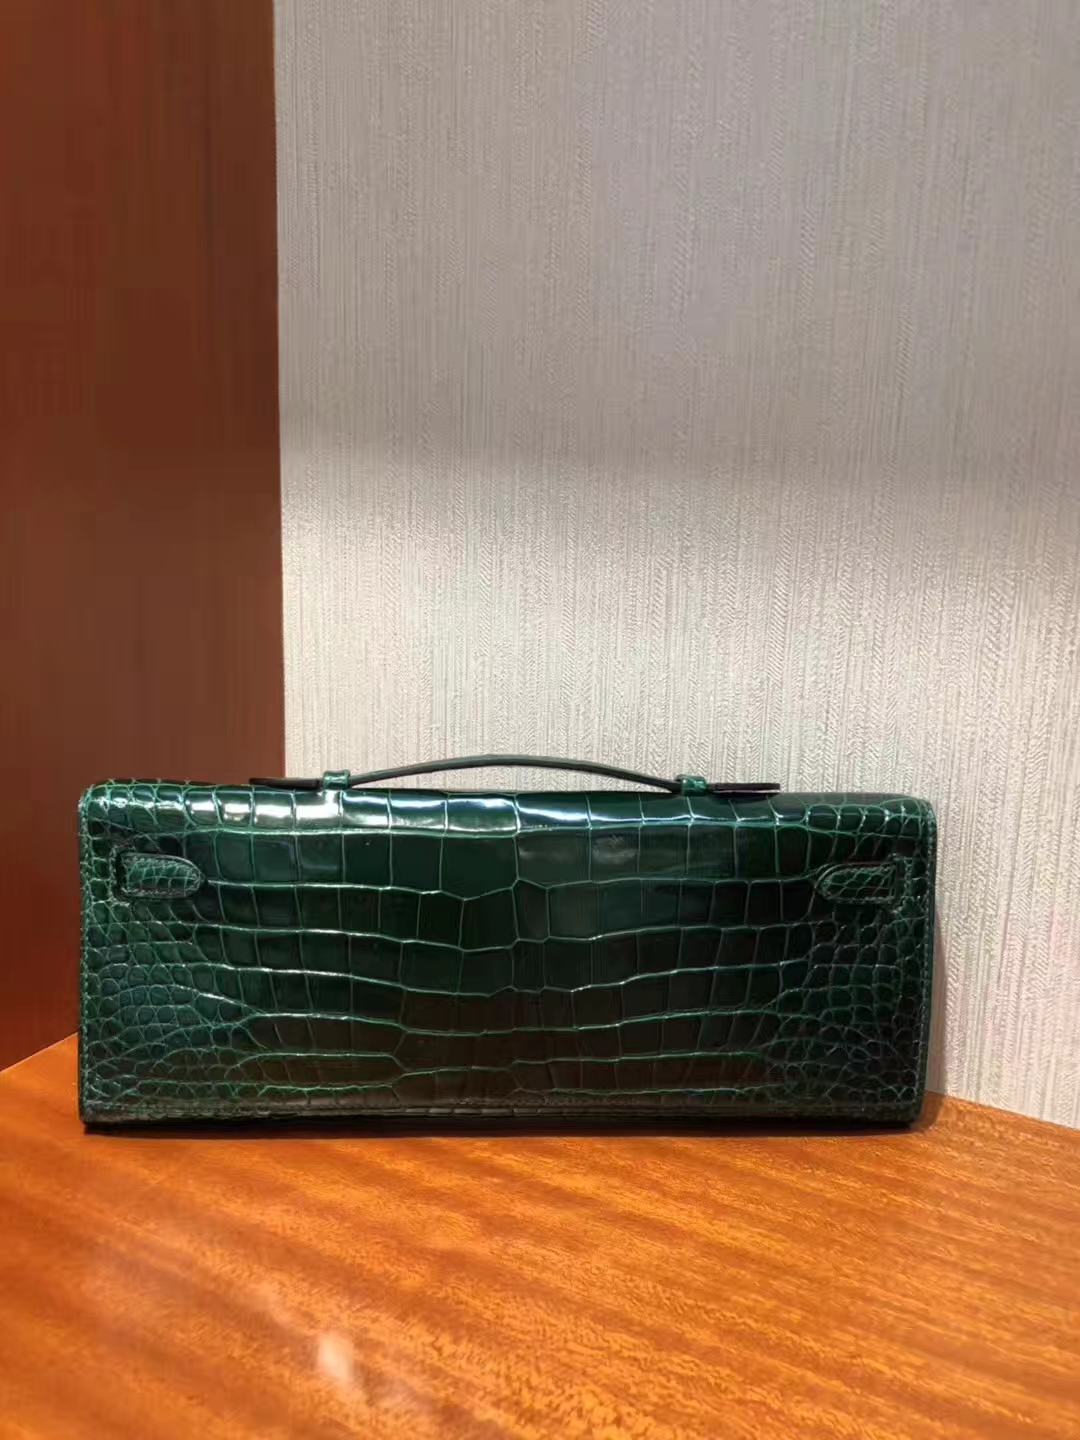 Elegant Hermes Shiny Crocodile Leather Kelly Cut Clutch Bag in CK67 Vert Fonce